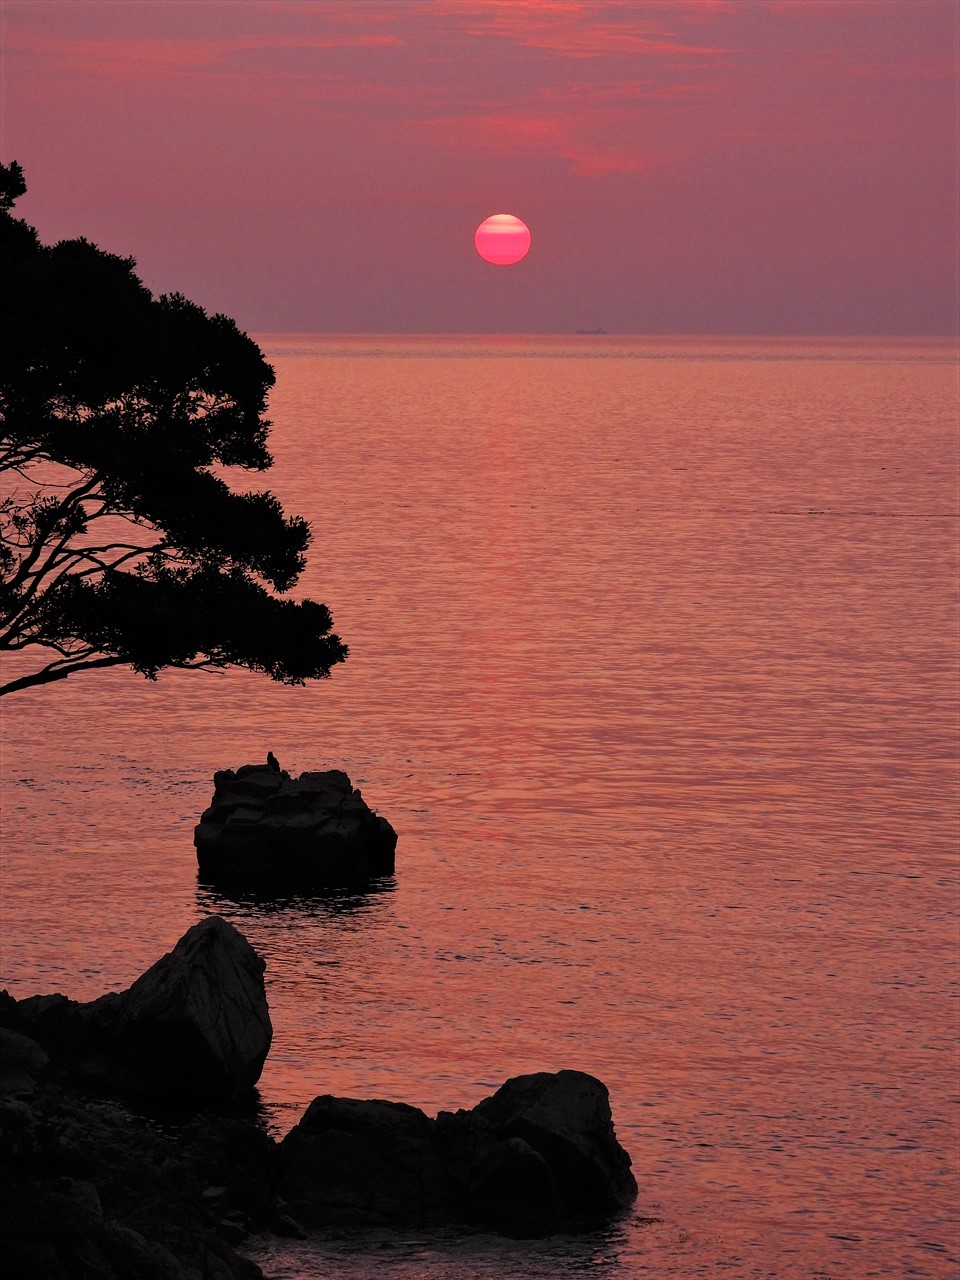 DSCN3950 (2)大阪湾と昇陽２０２１年６月２６日AM４：５７洲本市炬口付近～。